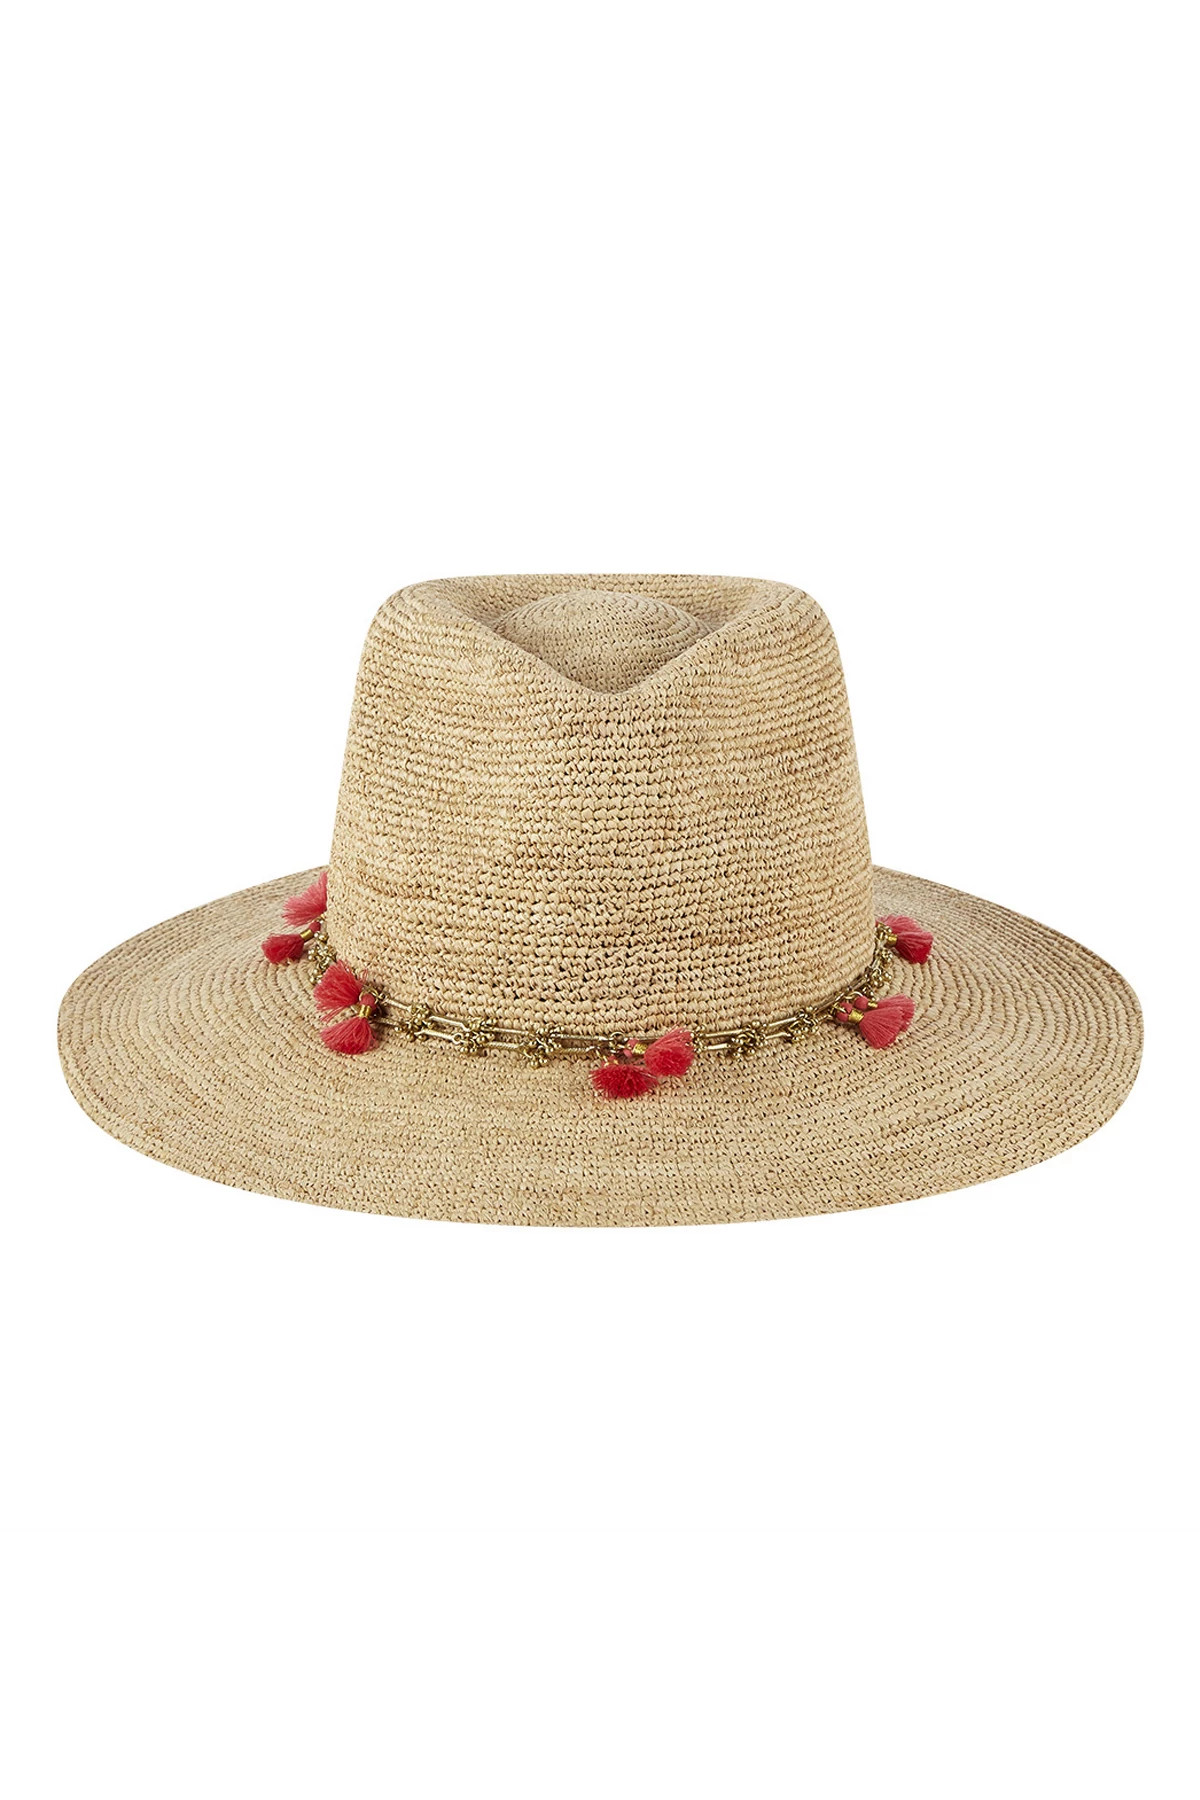 NATURAL/FUCHSIA Odele Panama Hat image number 1